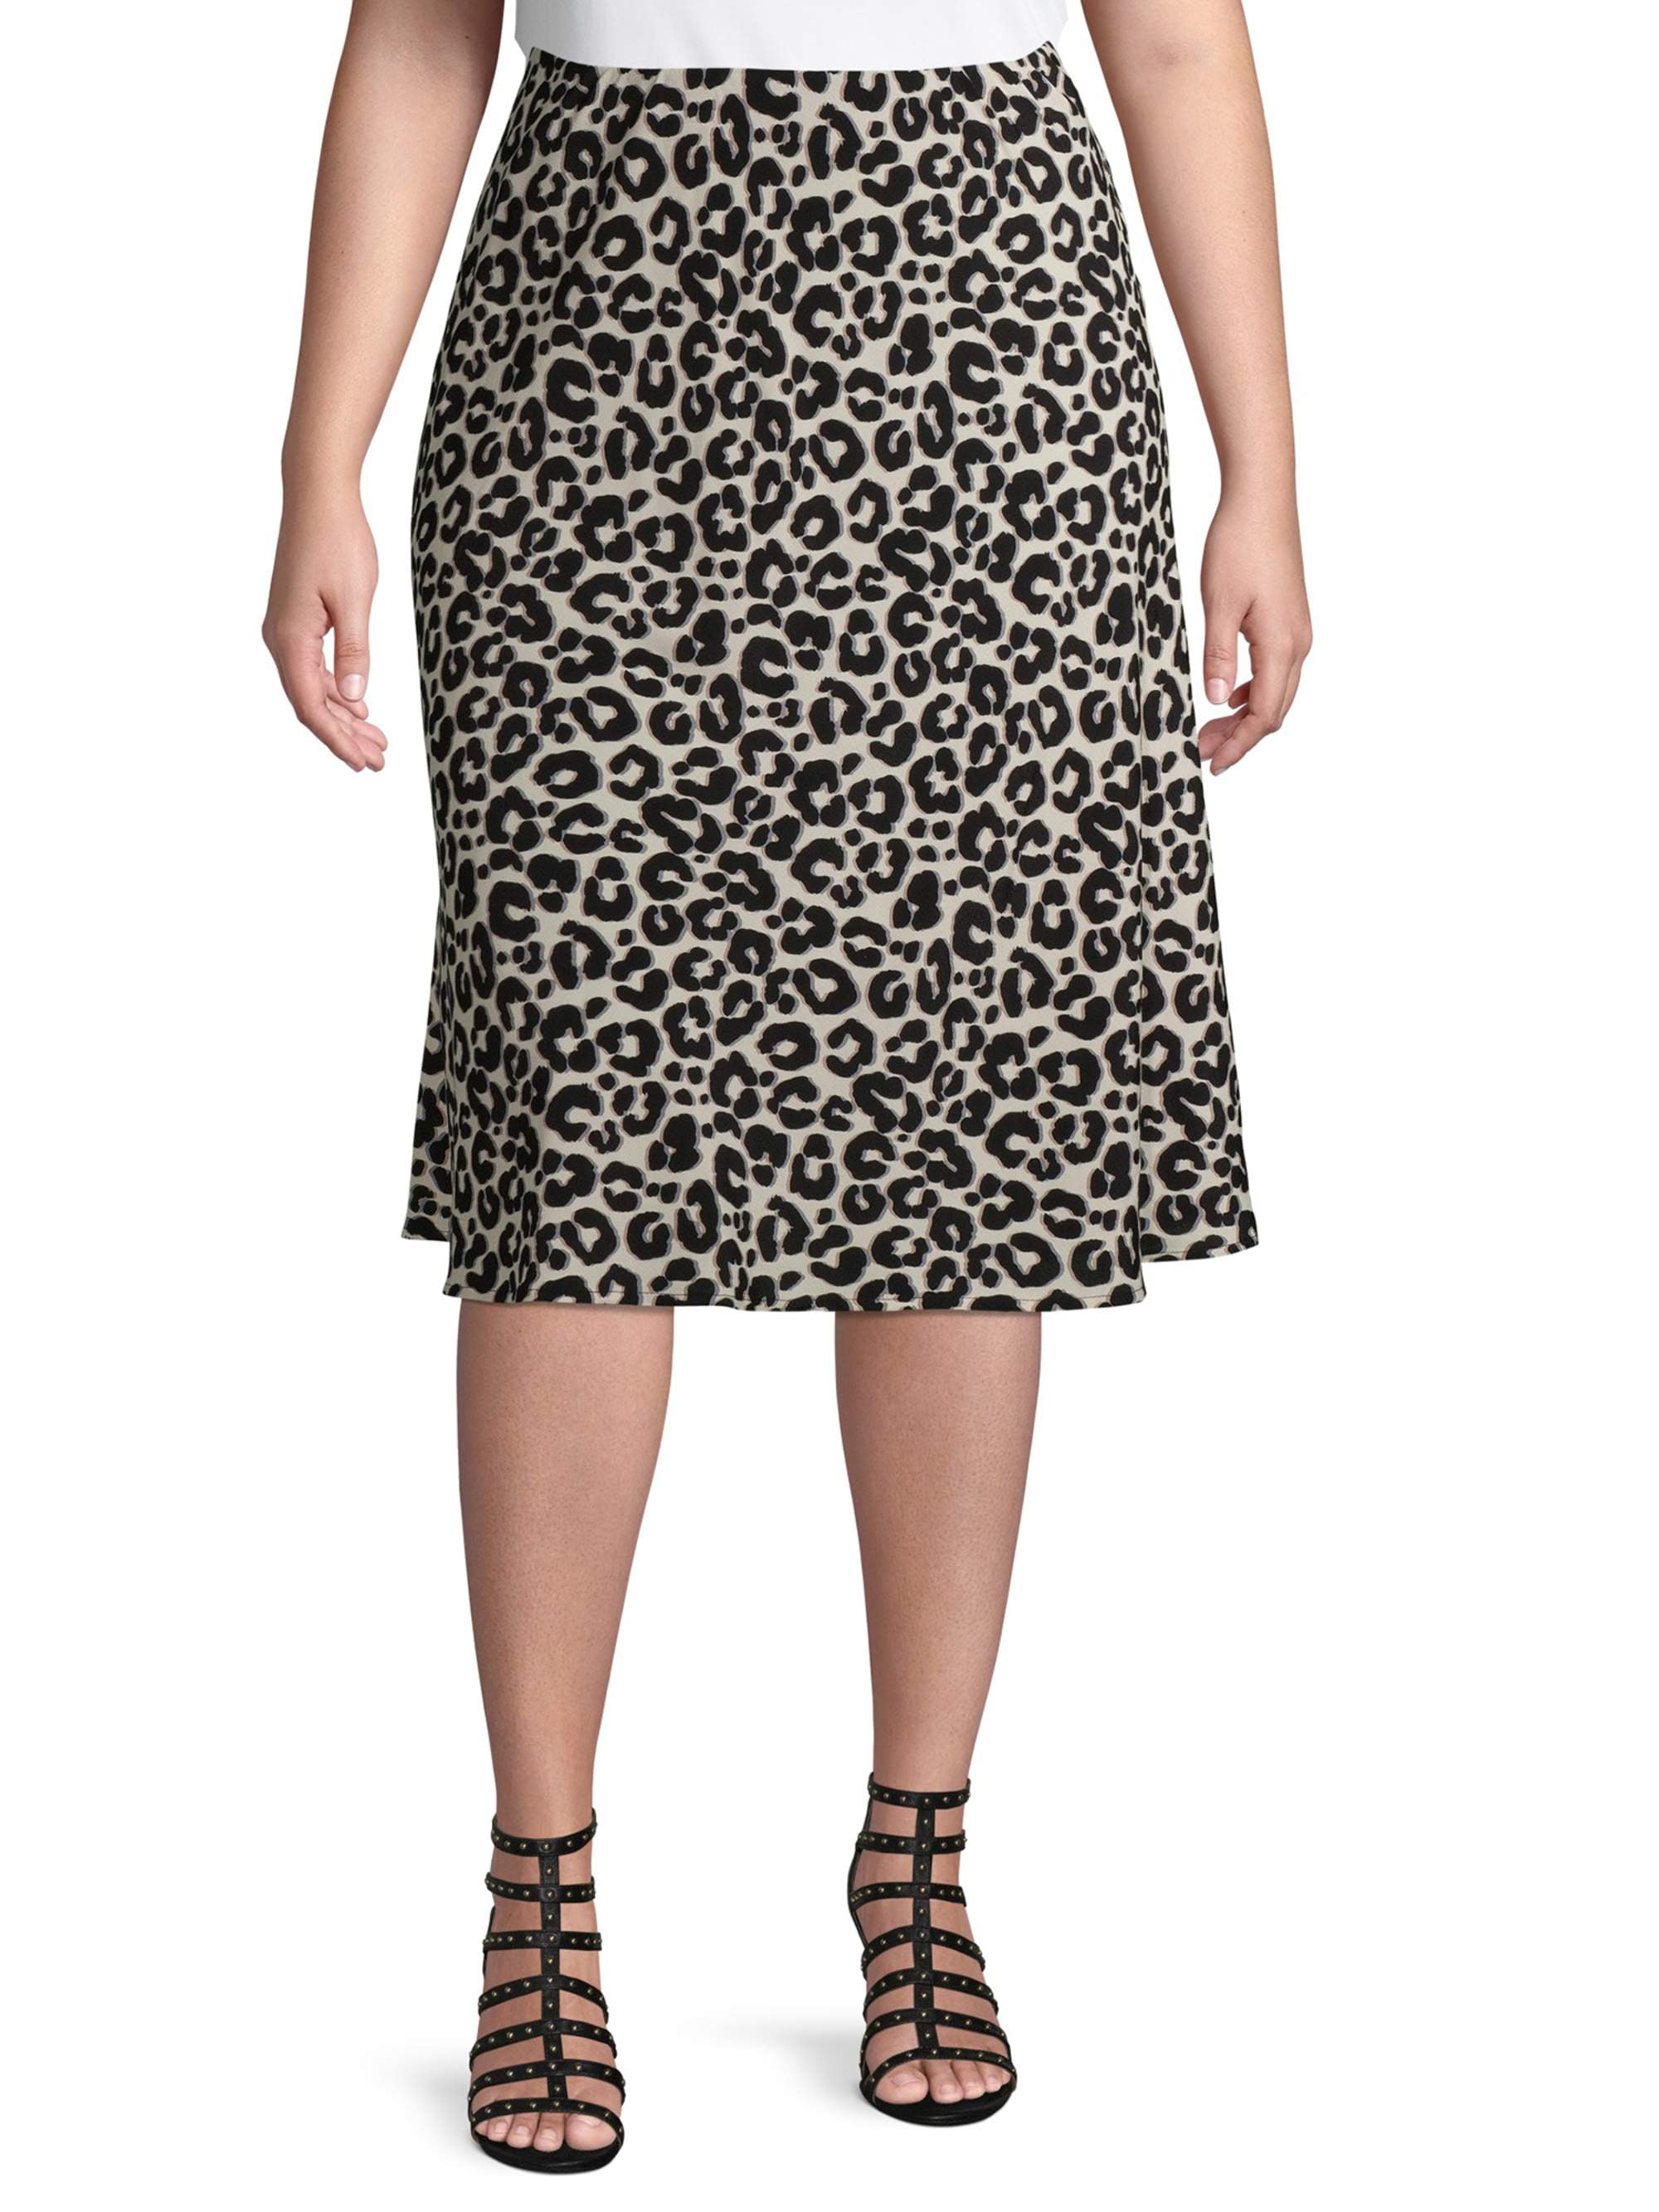 Terra & Sky Women's Plus Size Leopard Slip Skirt - Walmart.com